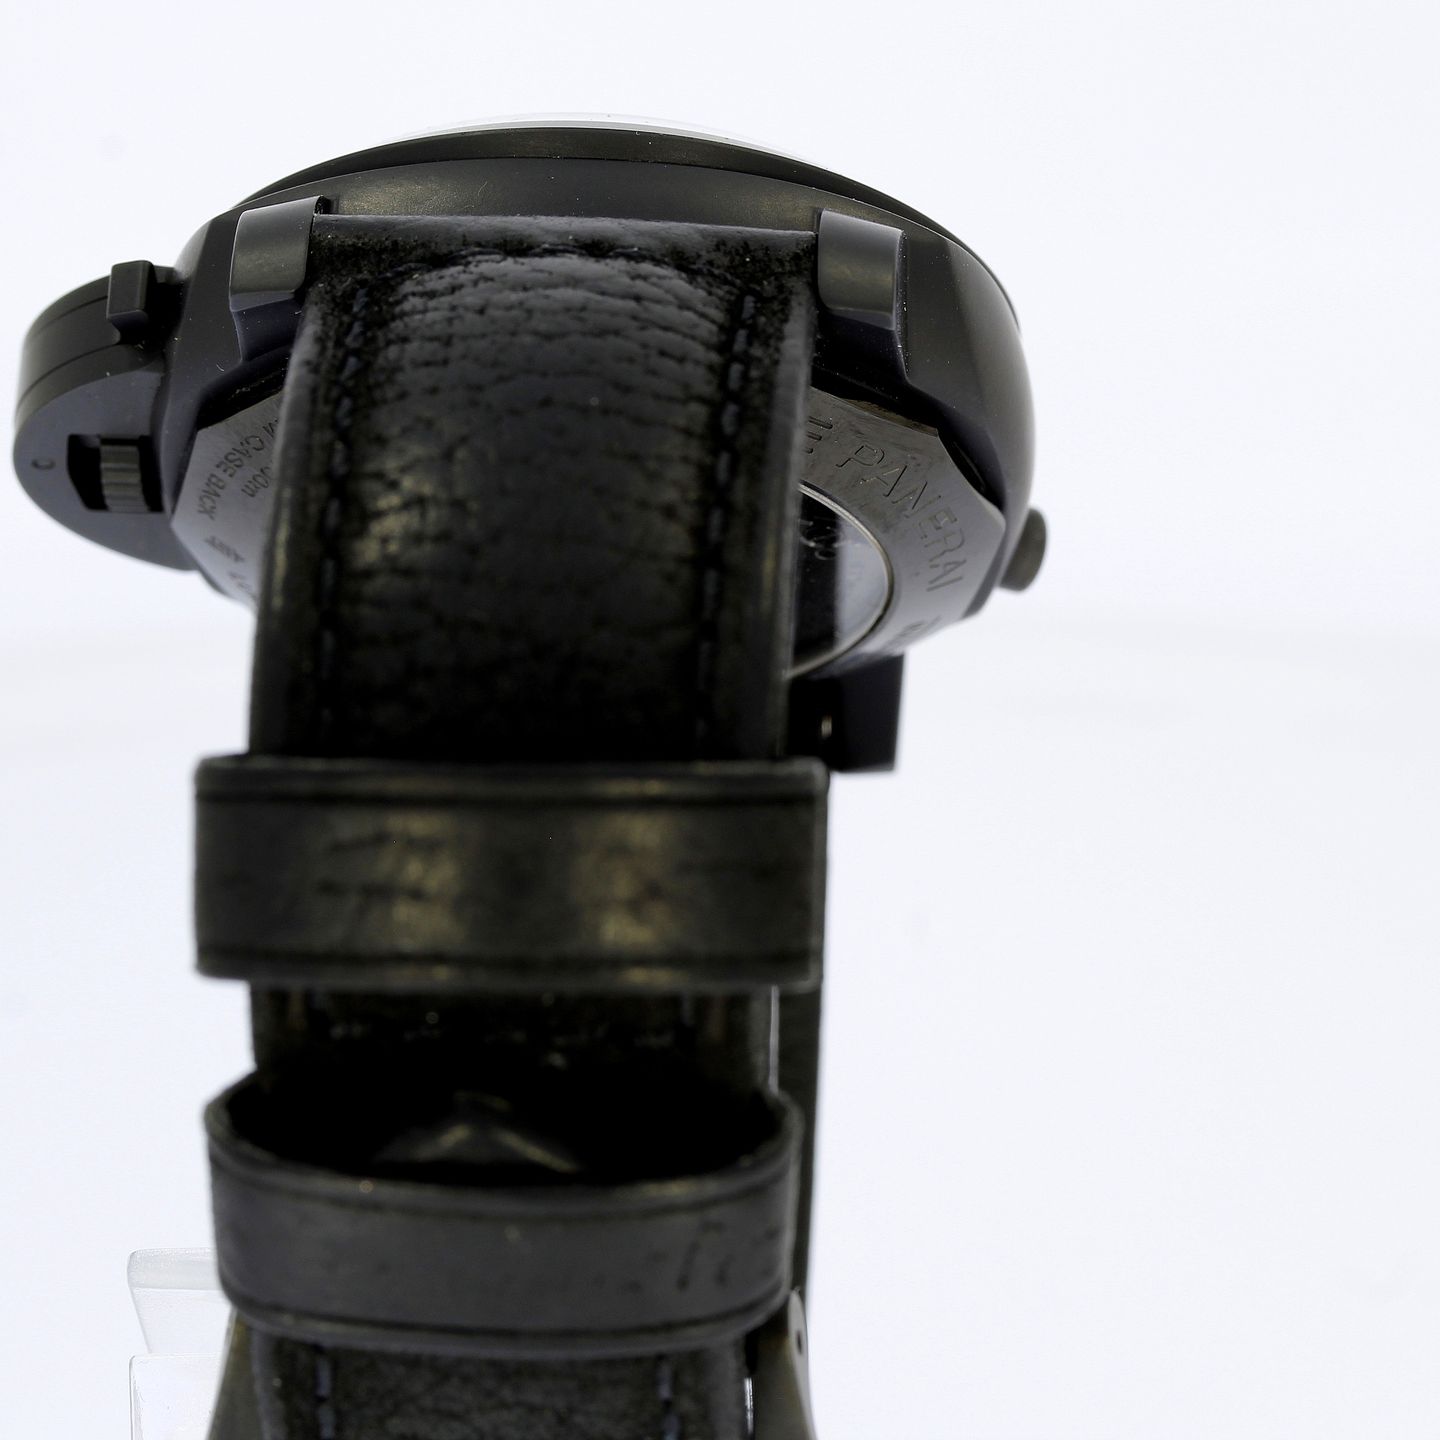 Panerai Luminor 1950 8 Days Chrono Monopulsante GMT PAM 00317 (2010) - Black dial 44 mm Ceramic case (6/7)